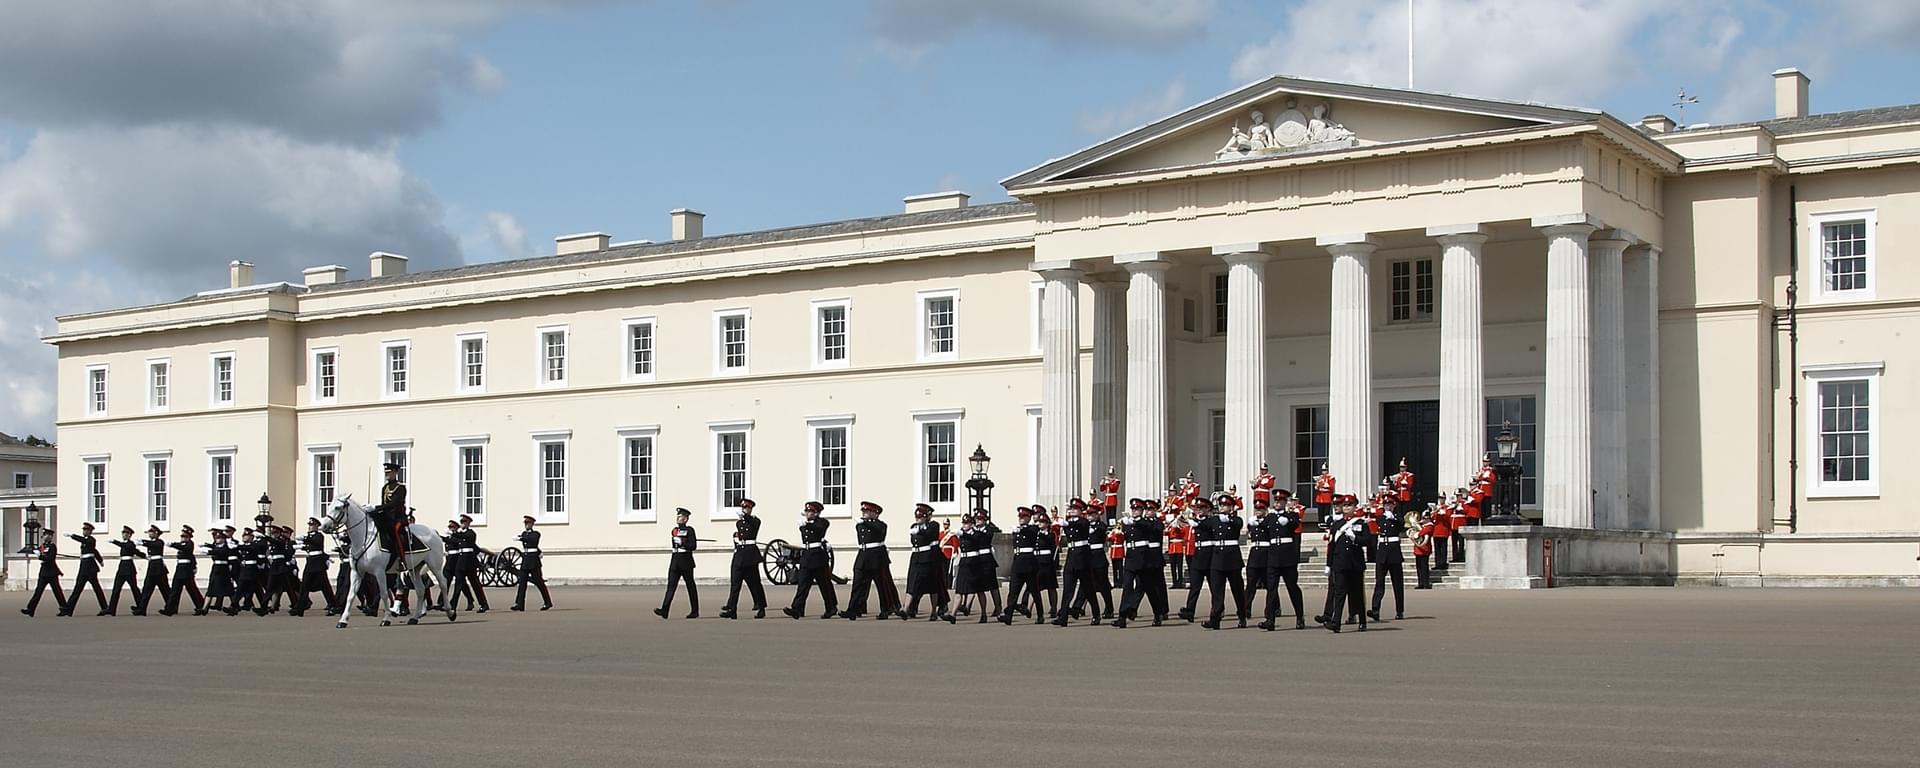 Parade at British Royal Military Academy Sandhurst